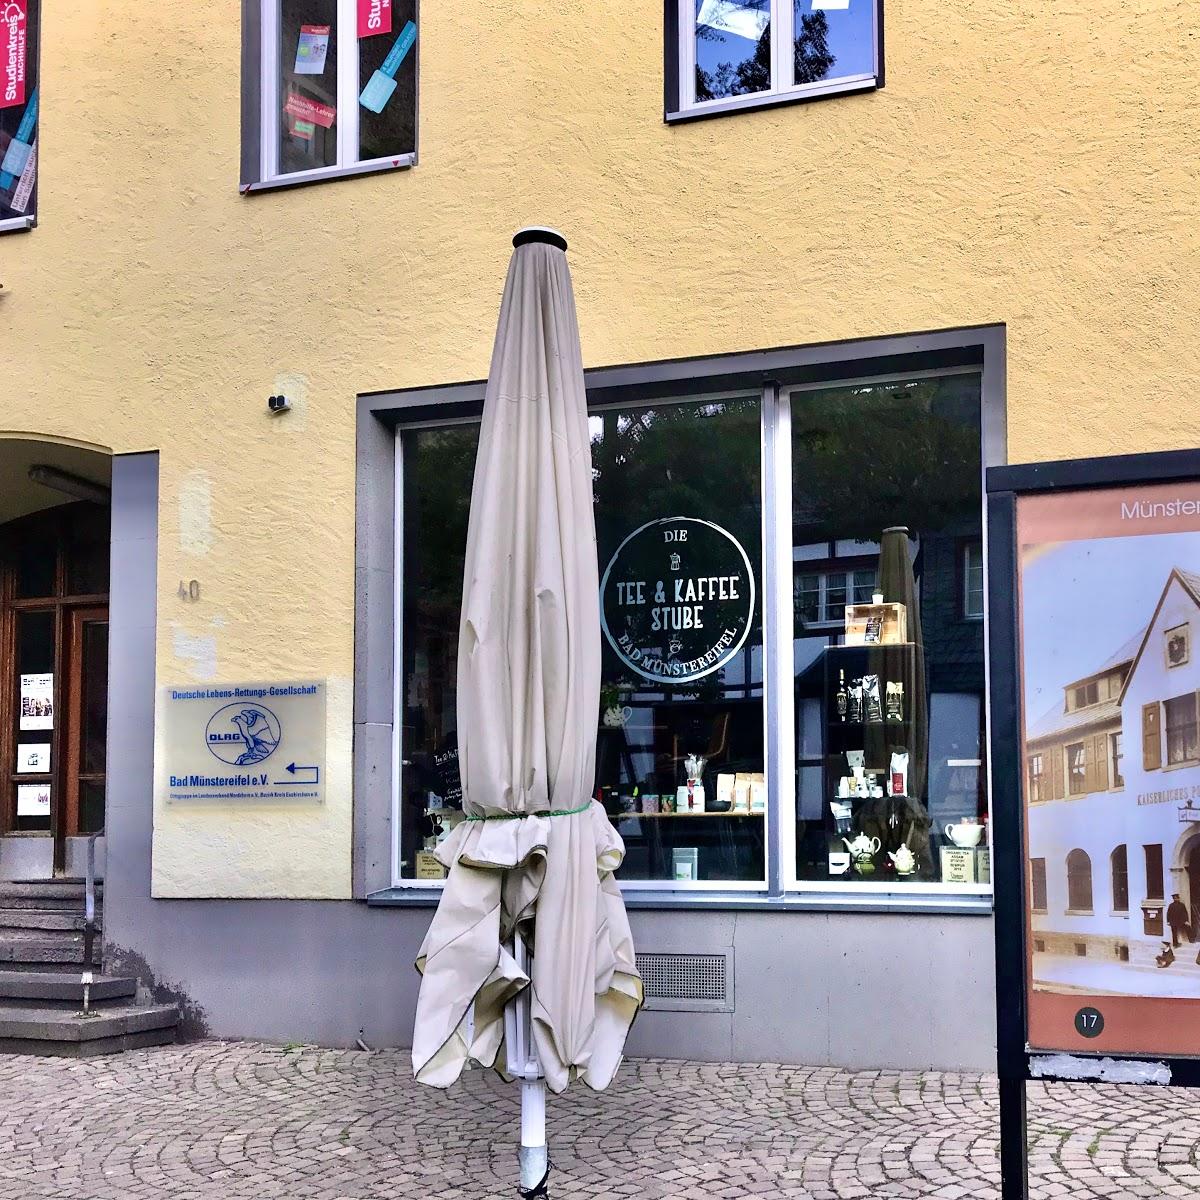 Restaurant "Tee- & Kaffeestube" in Bad Münstereifel